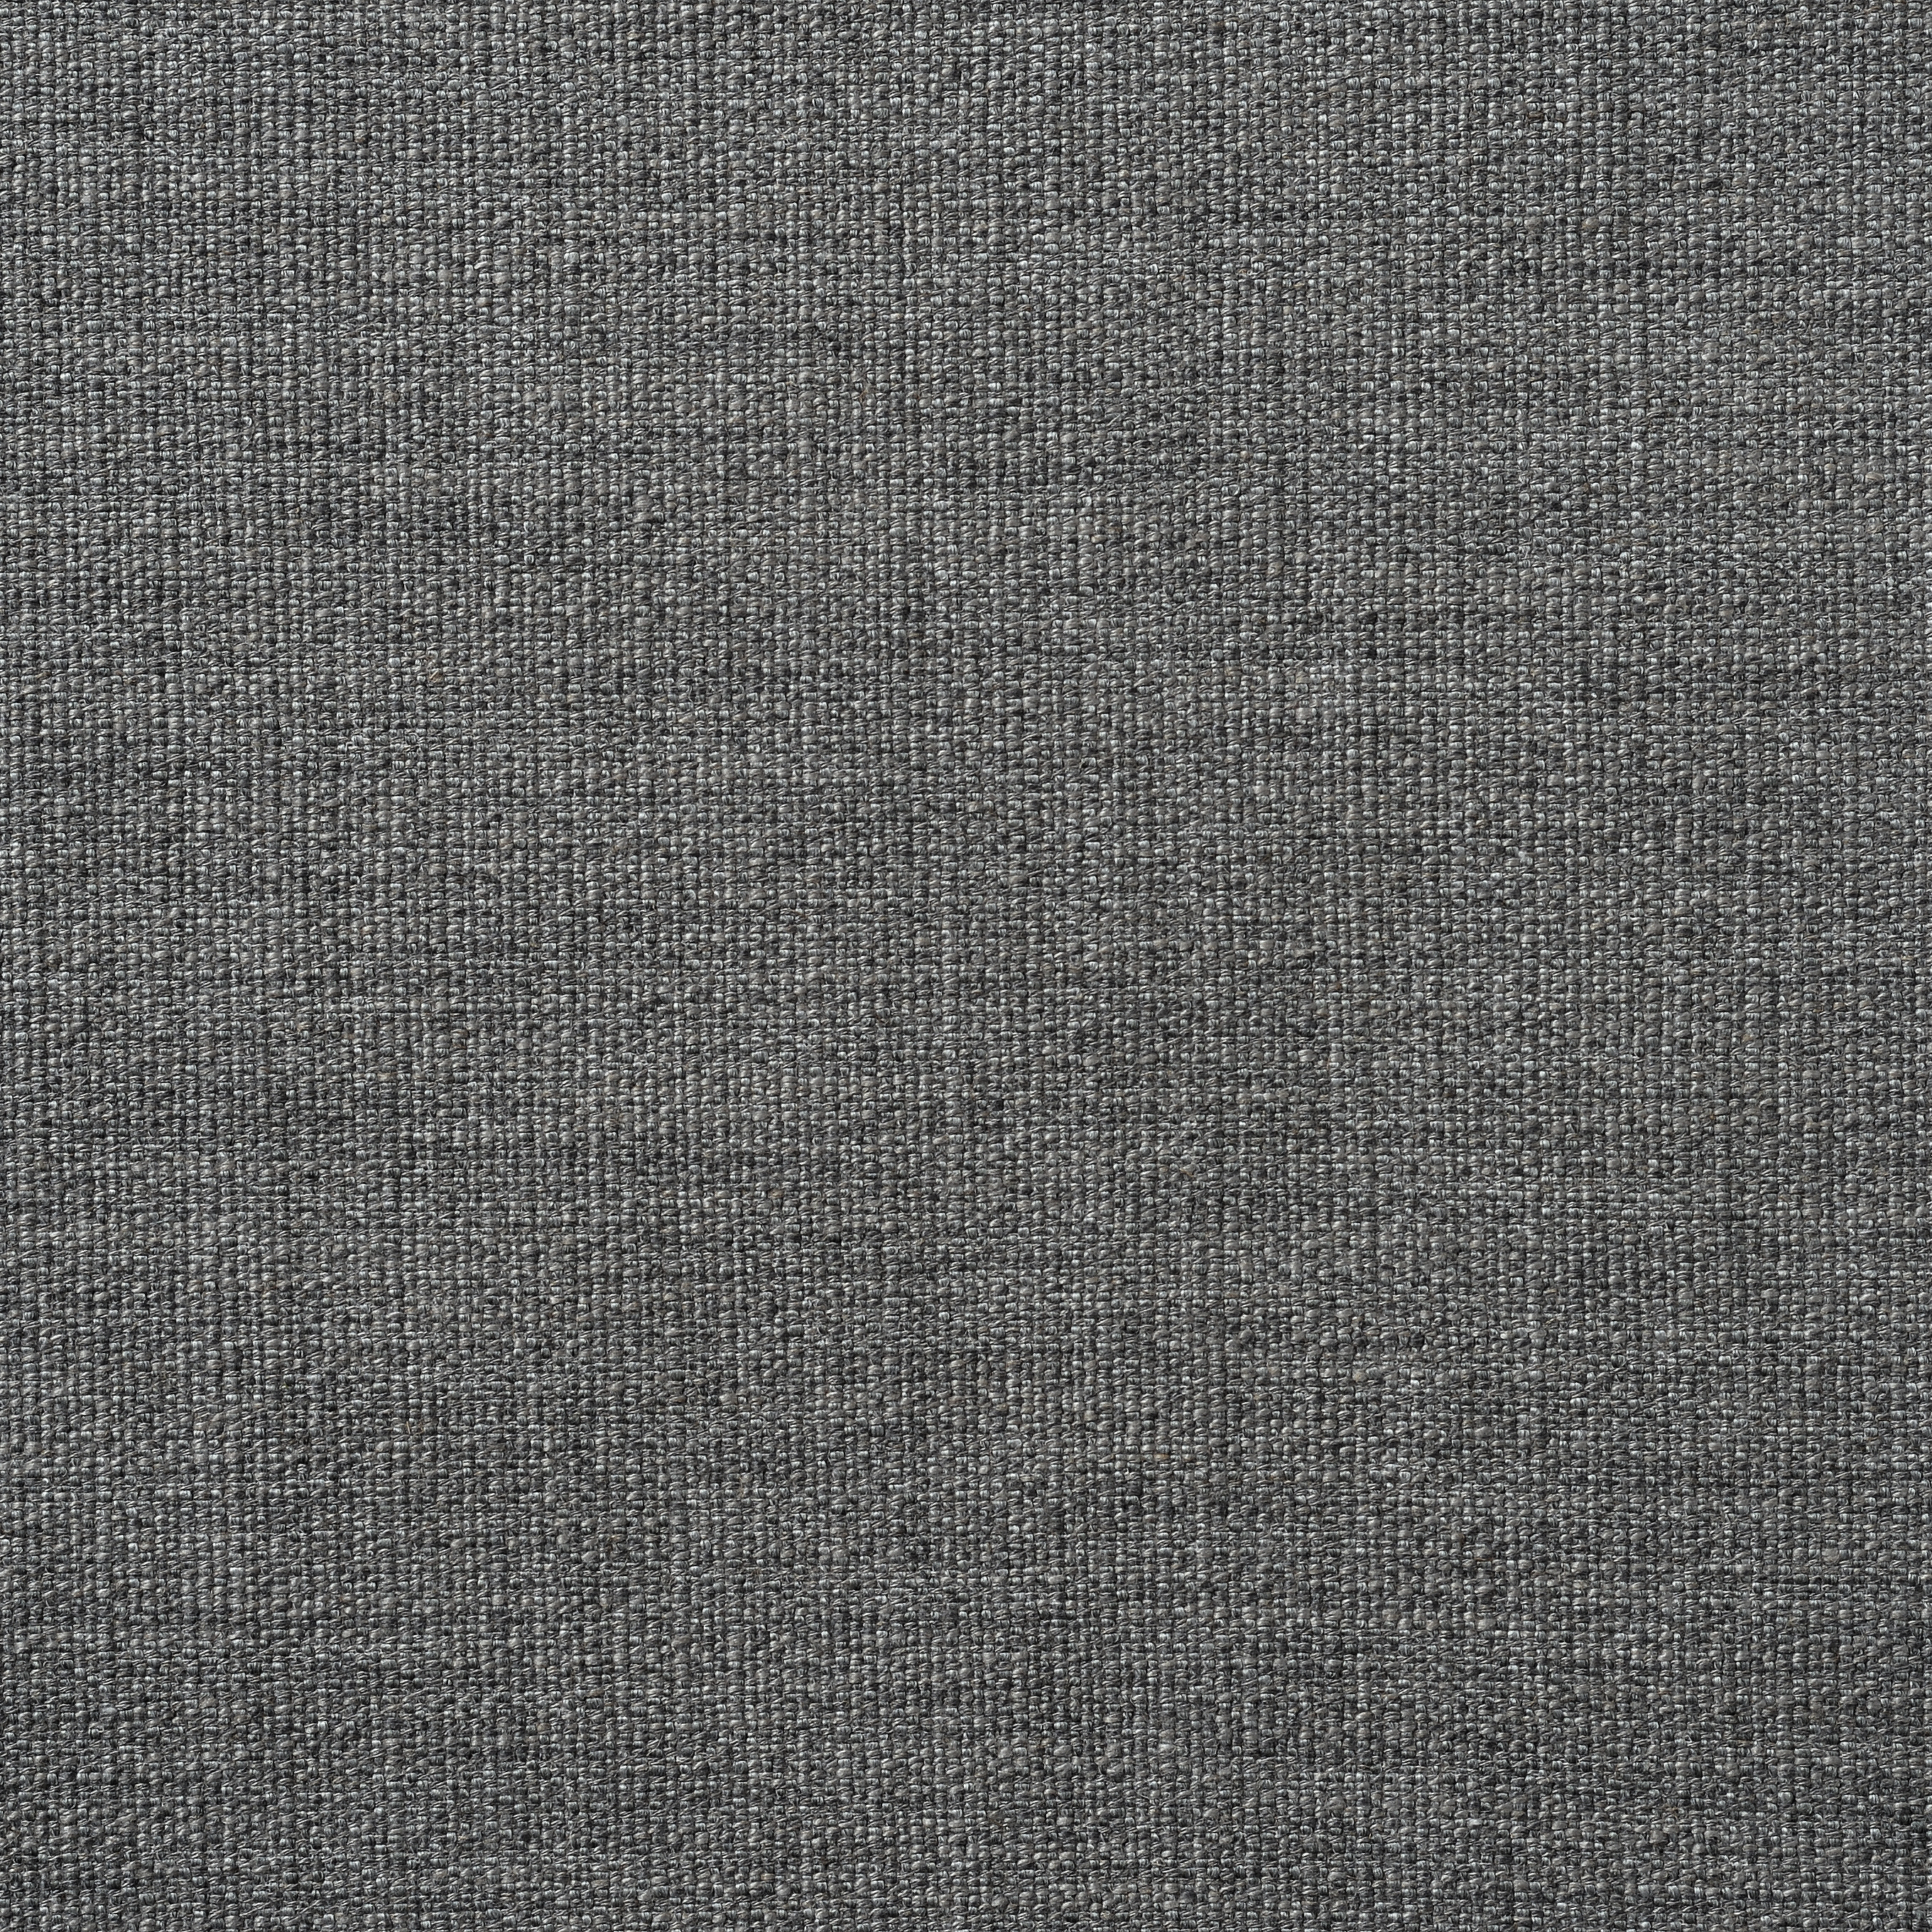 Eleanor Small Rustic Weave - Grey Marl